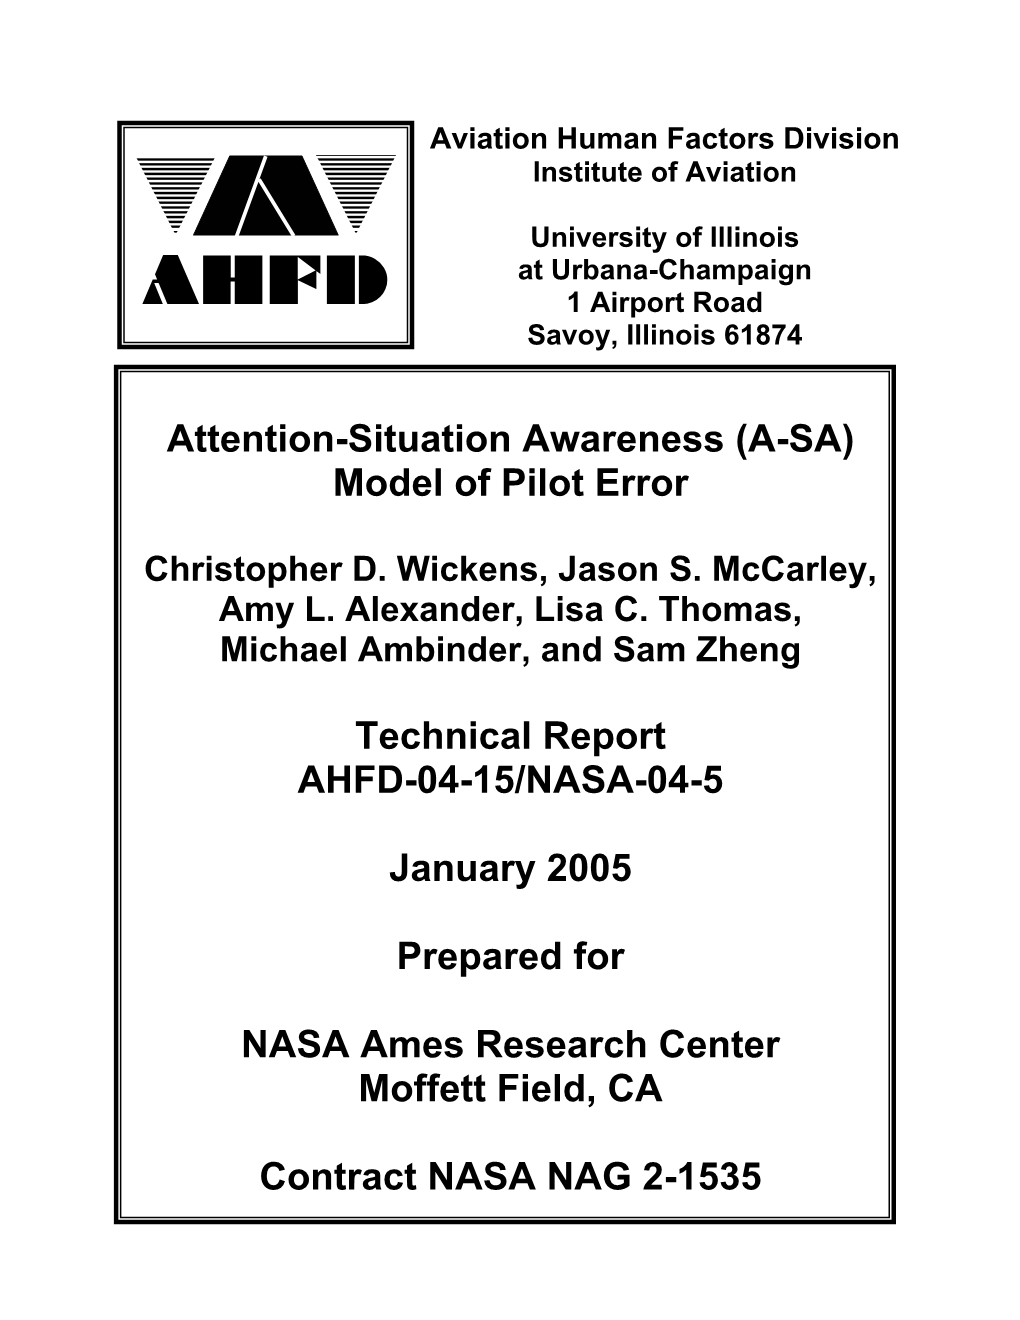 Attention-Situation Awareness (A-SA) Model of Pilot Error